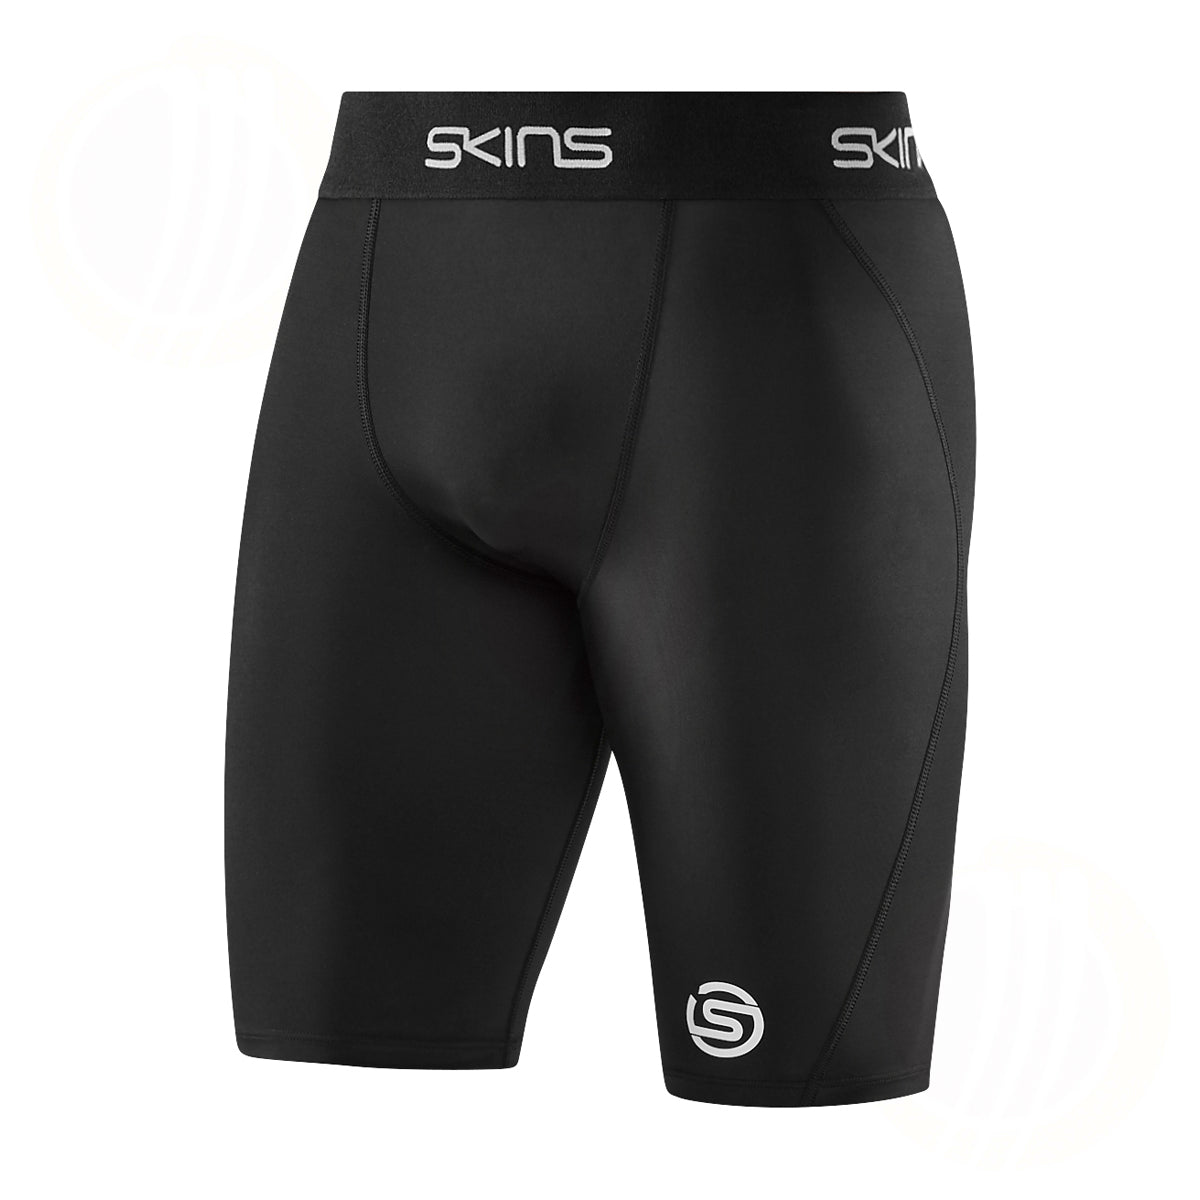 rebel sport - WIN a pair of men's SKINS Series 3 tights in black